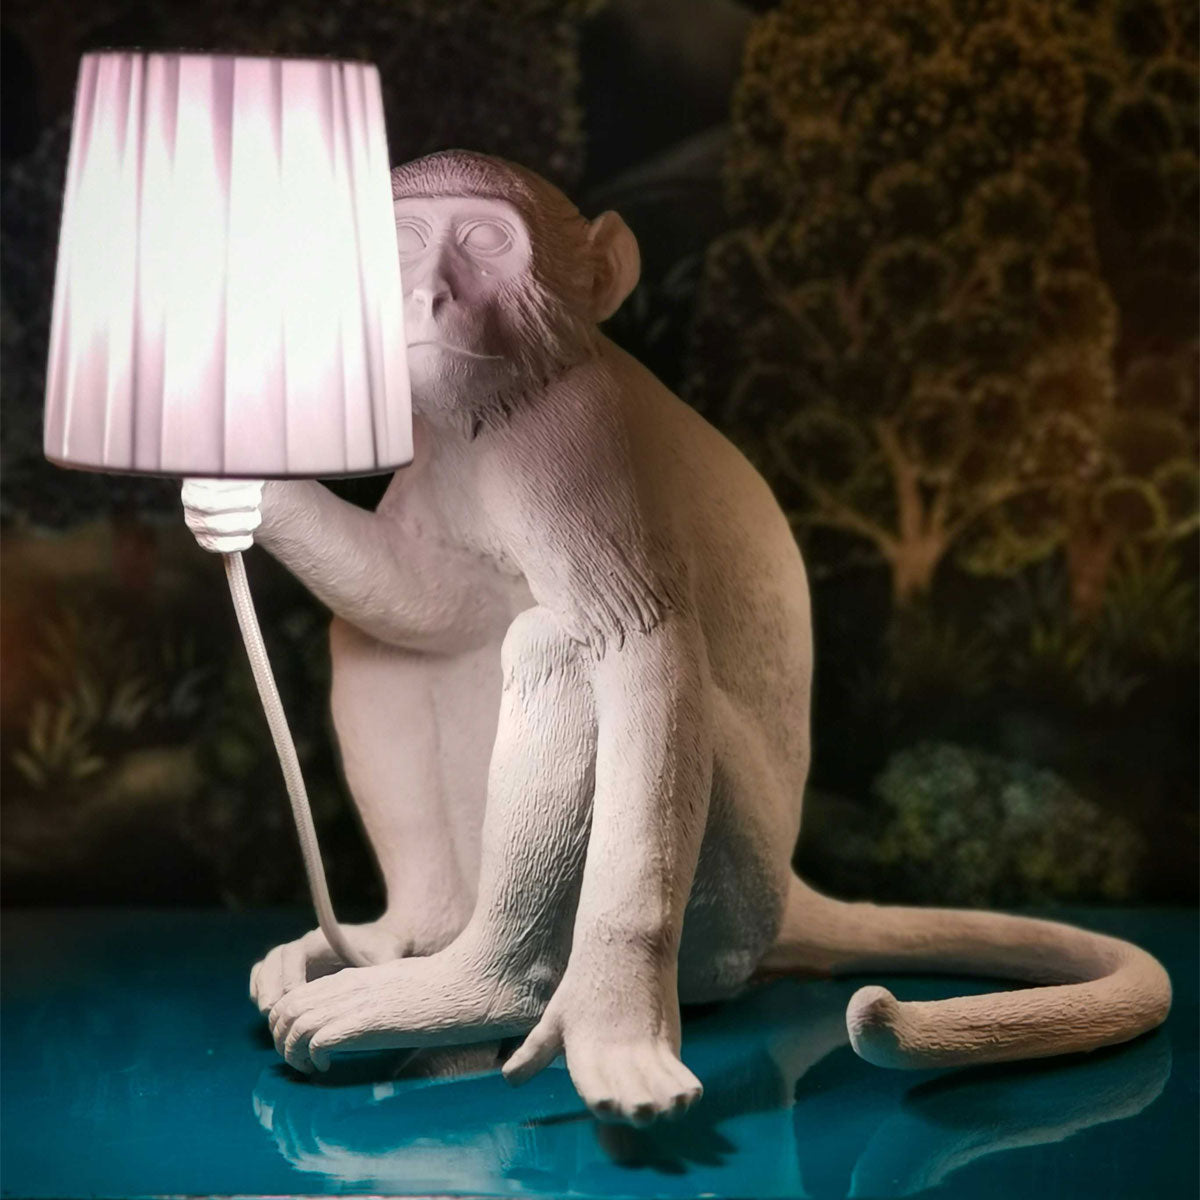 Sitting Monkey Light White - Seletti